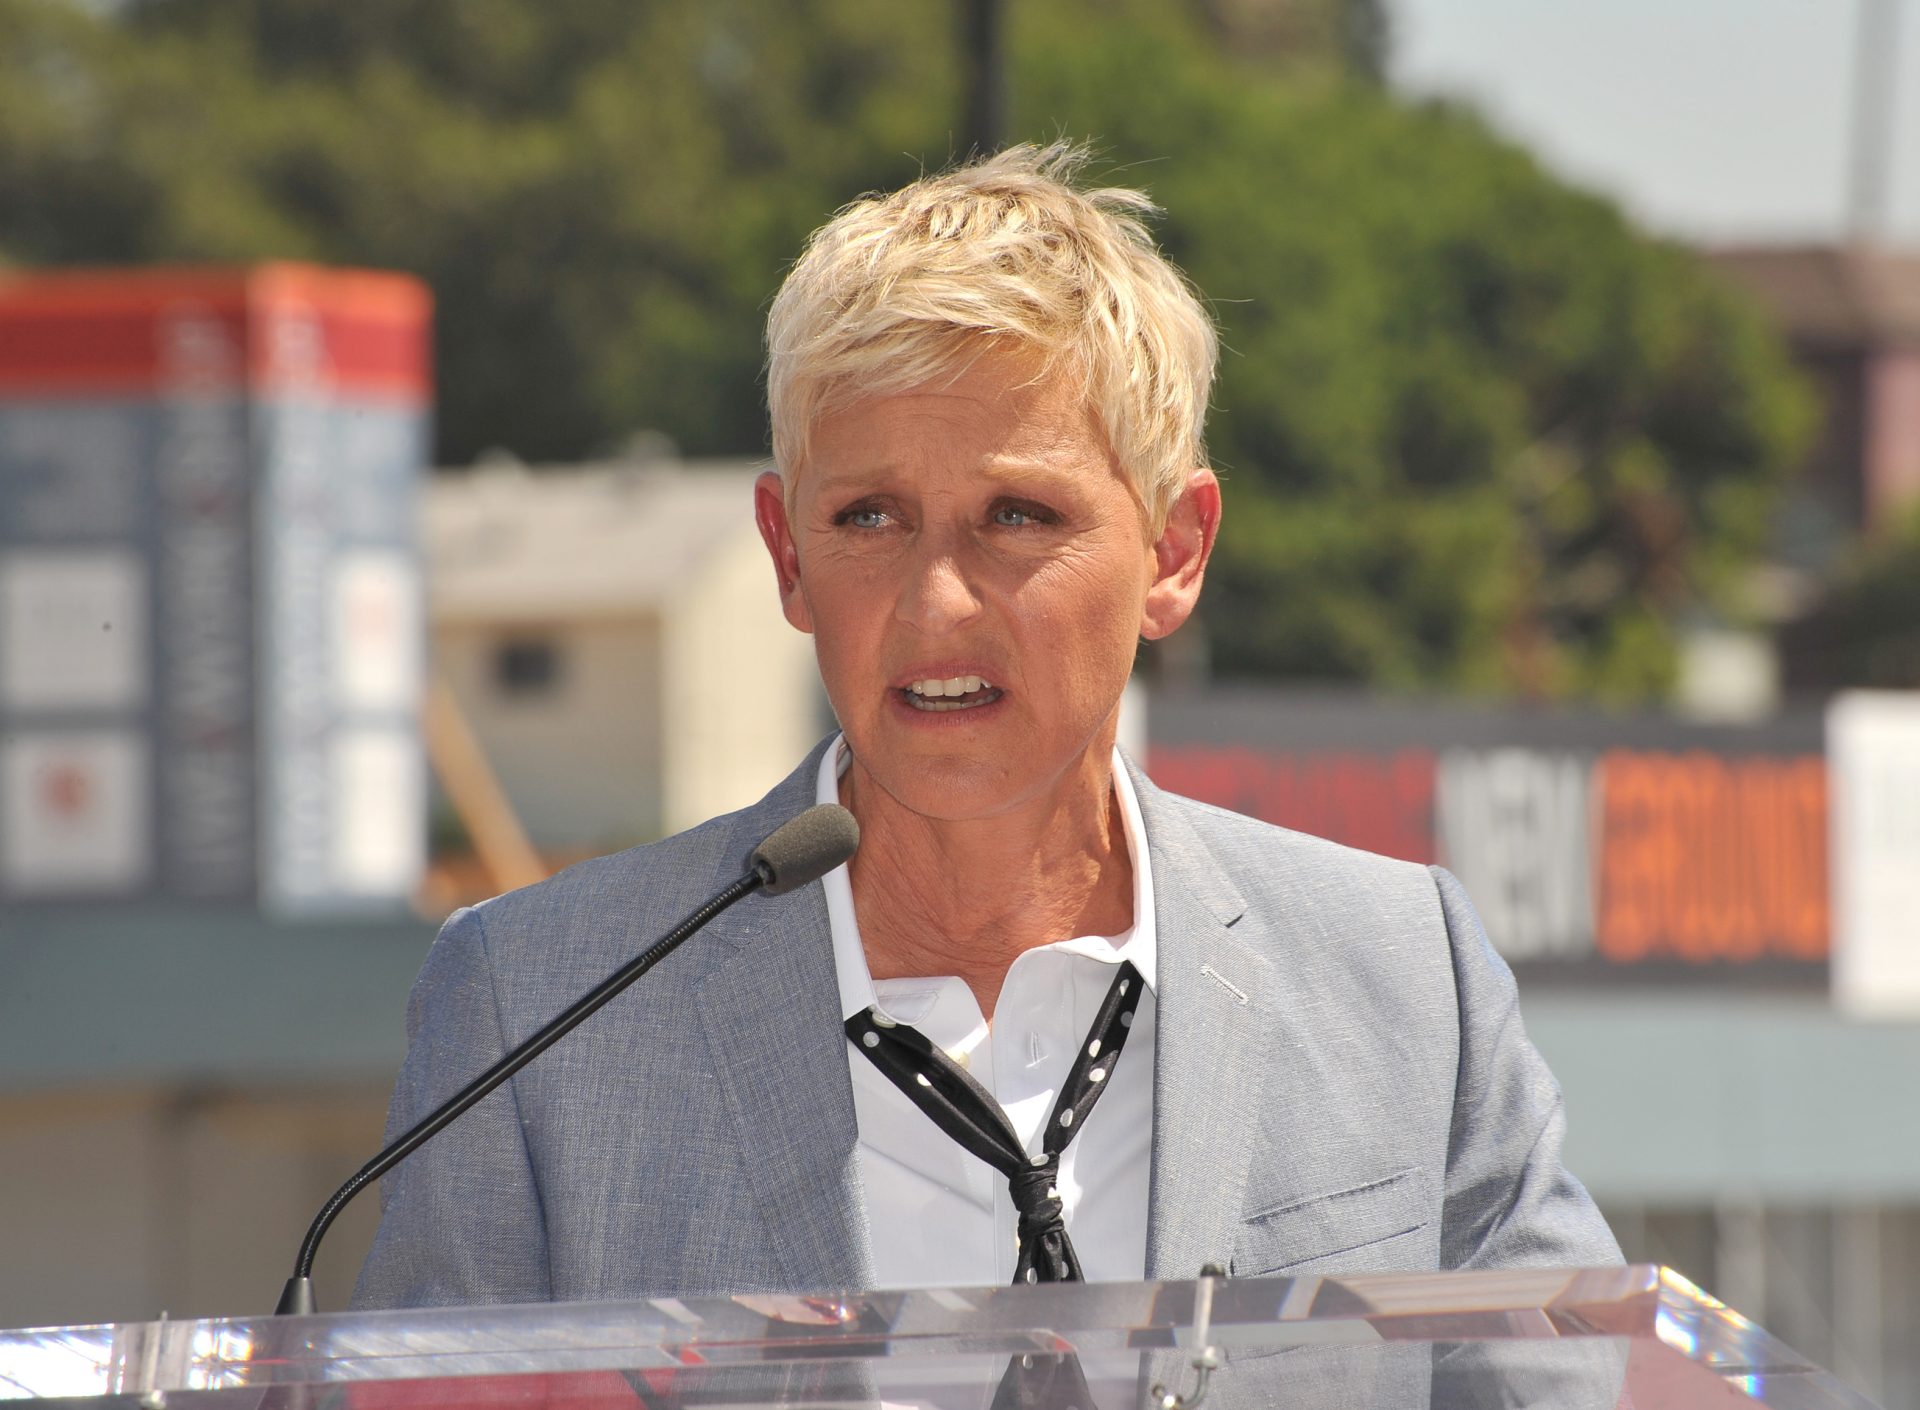 Ellen DeGeneres diz ter sido “expulsa” do programa “por ser má”. 